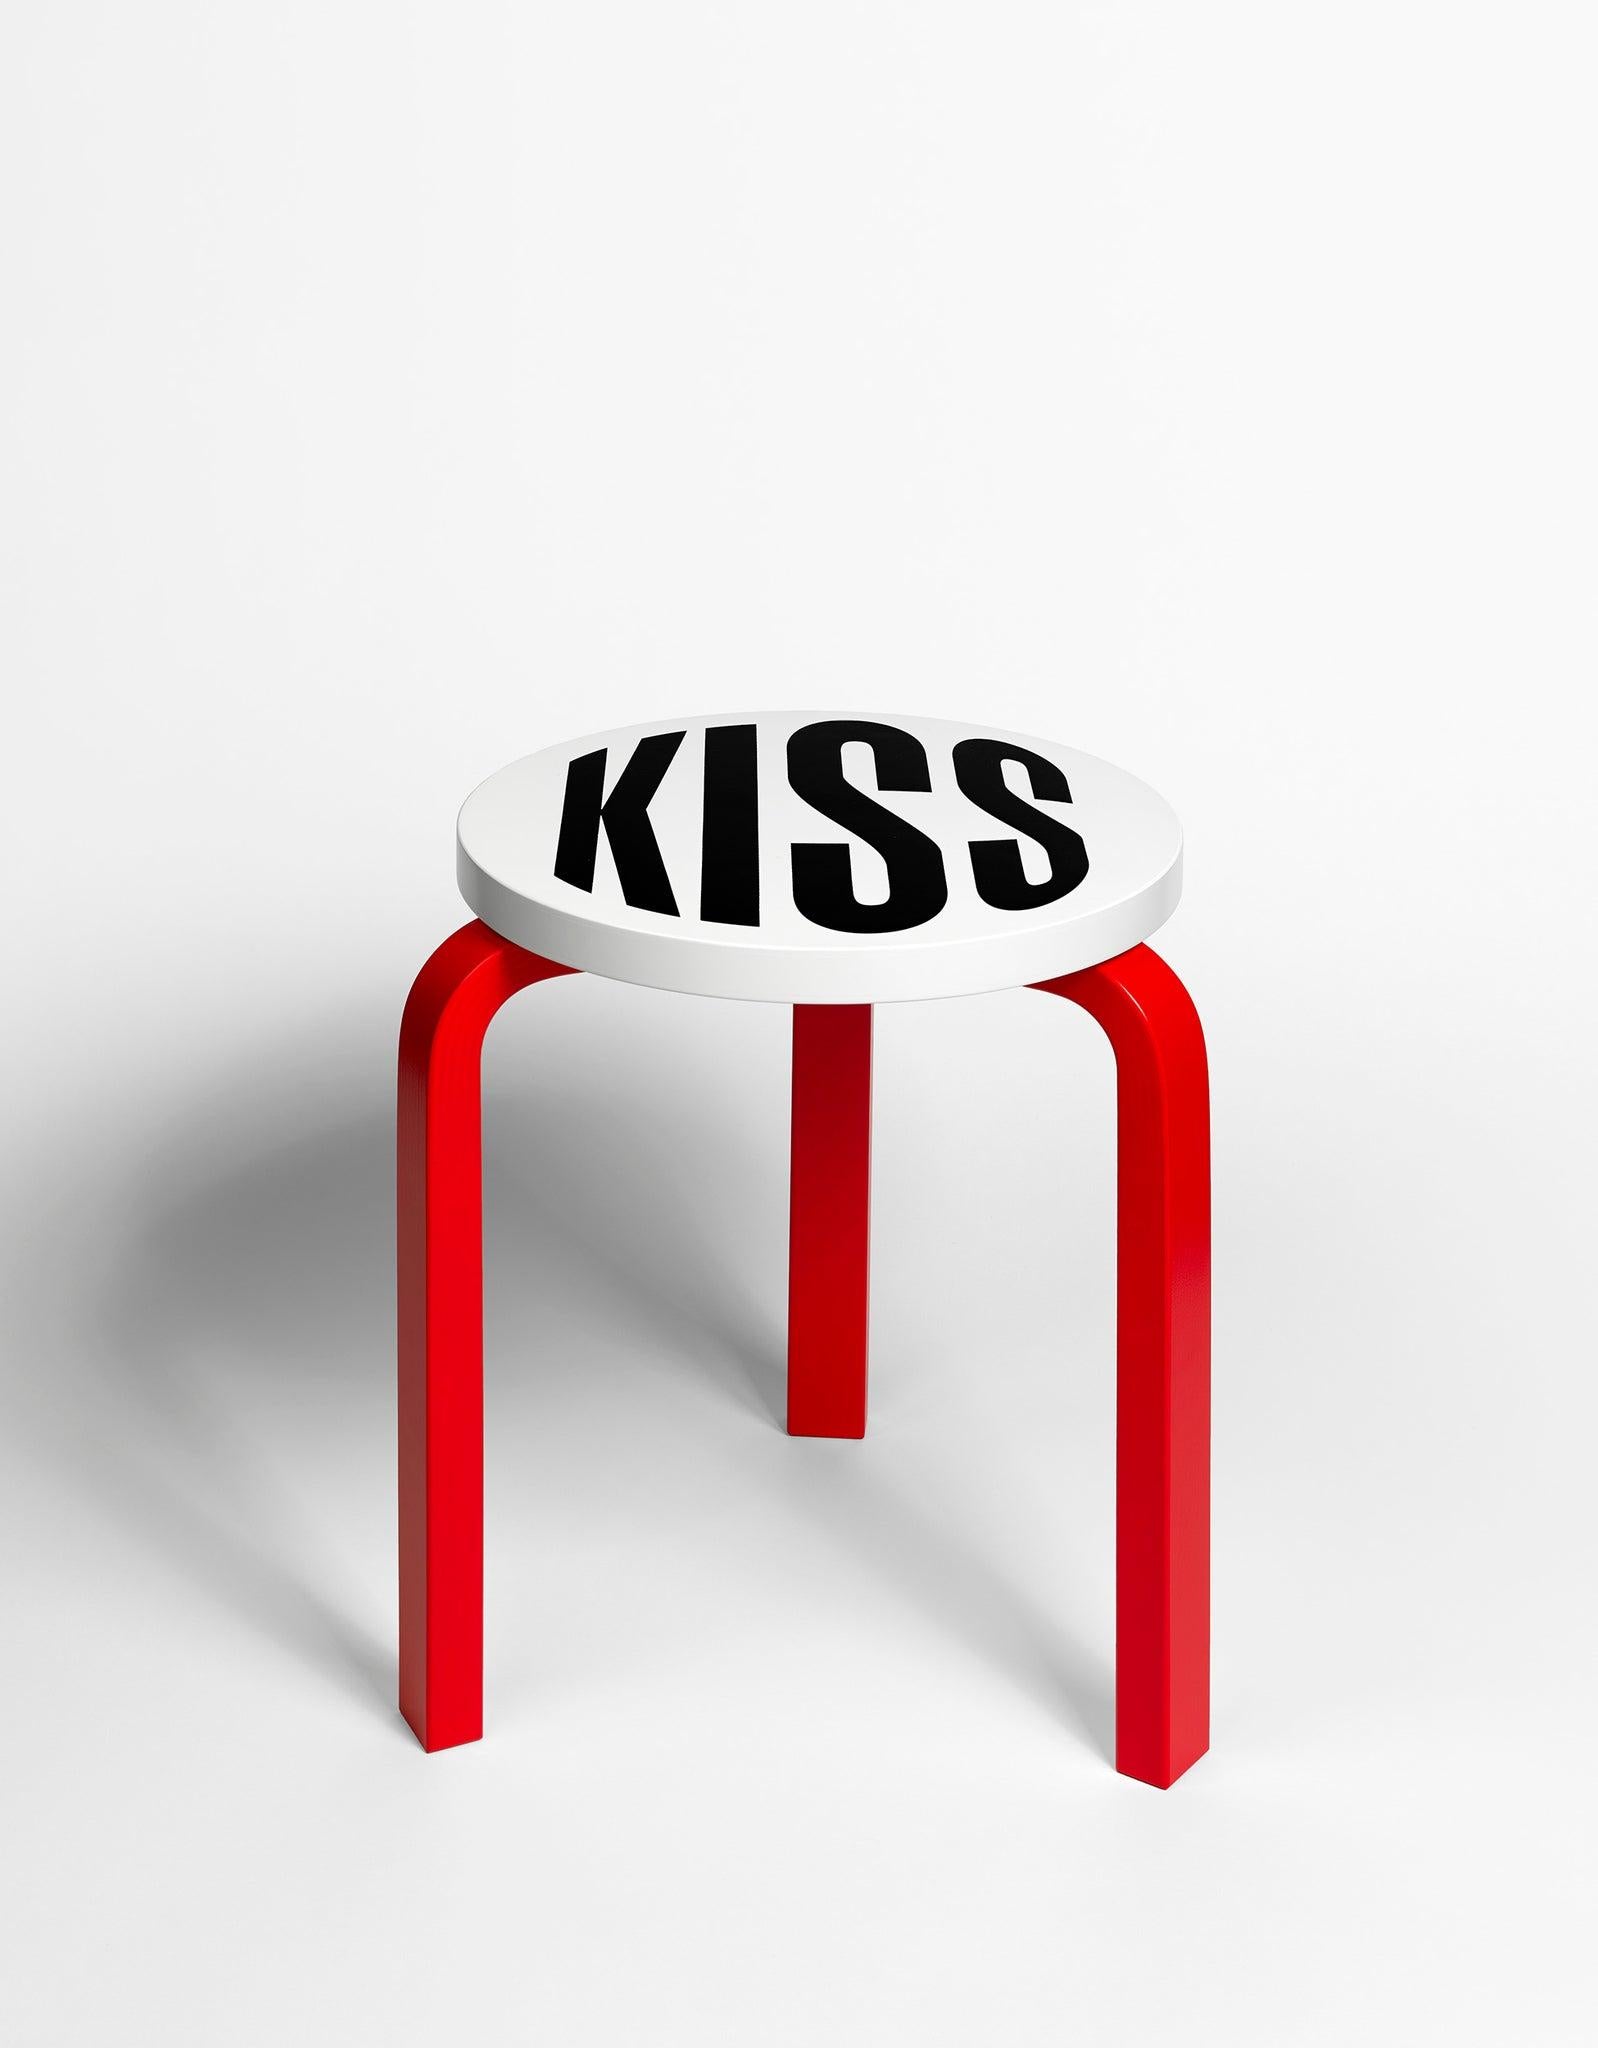 Untitled (Kiss) - Art by Barbara Kruger